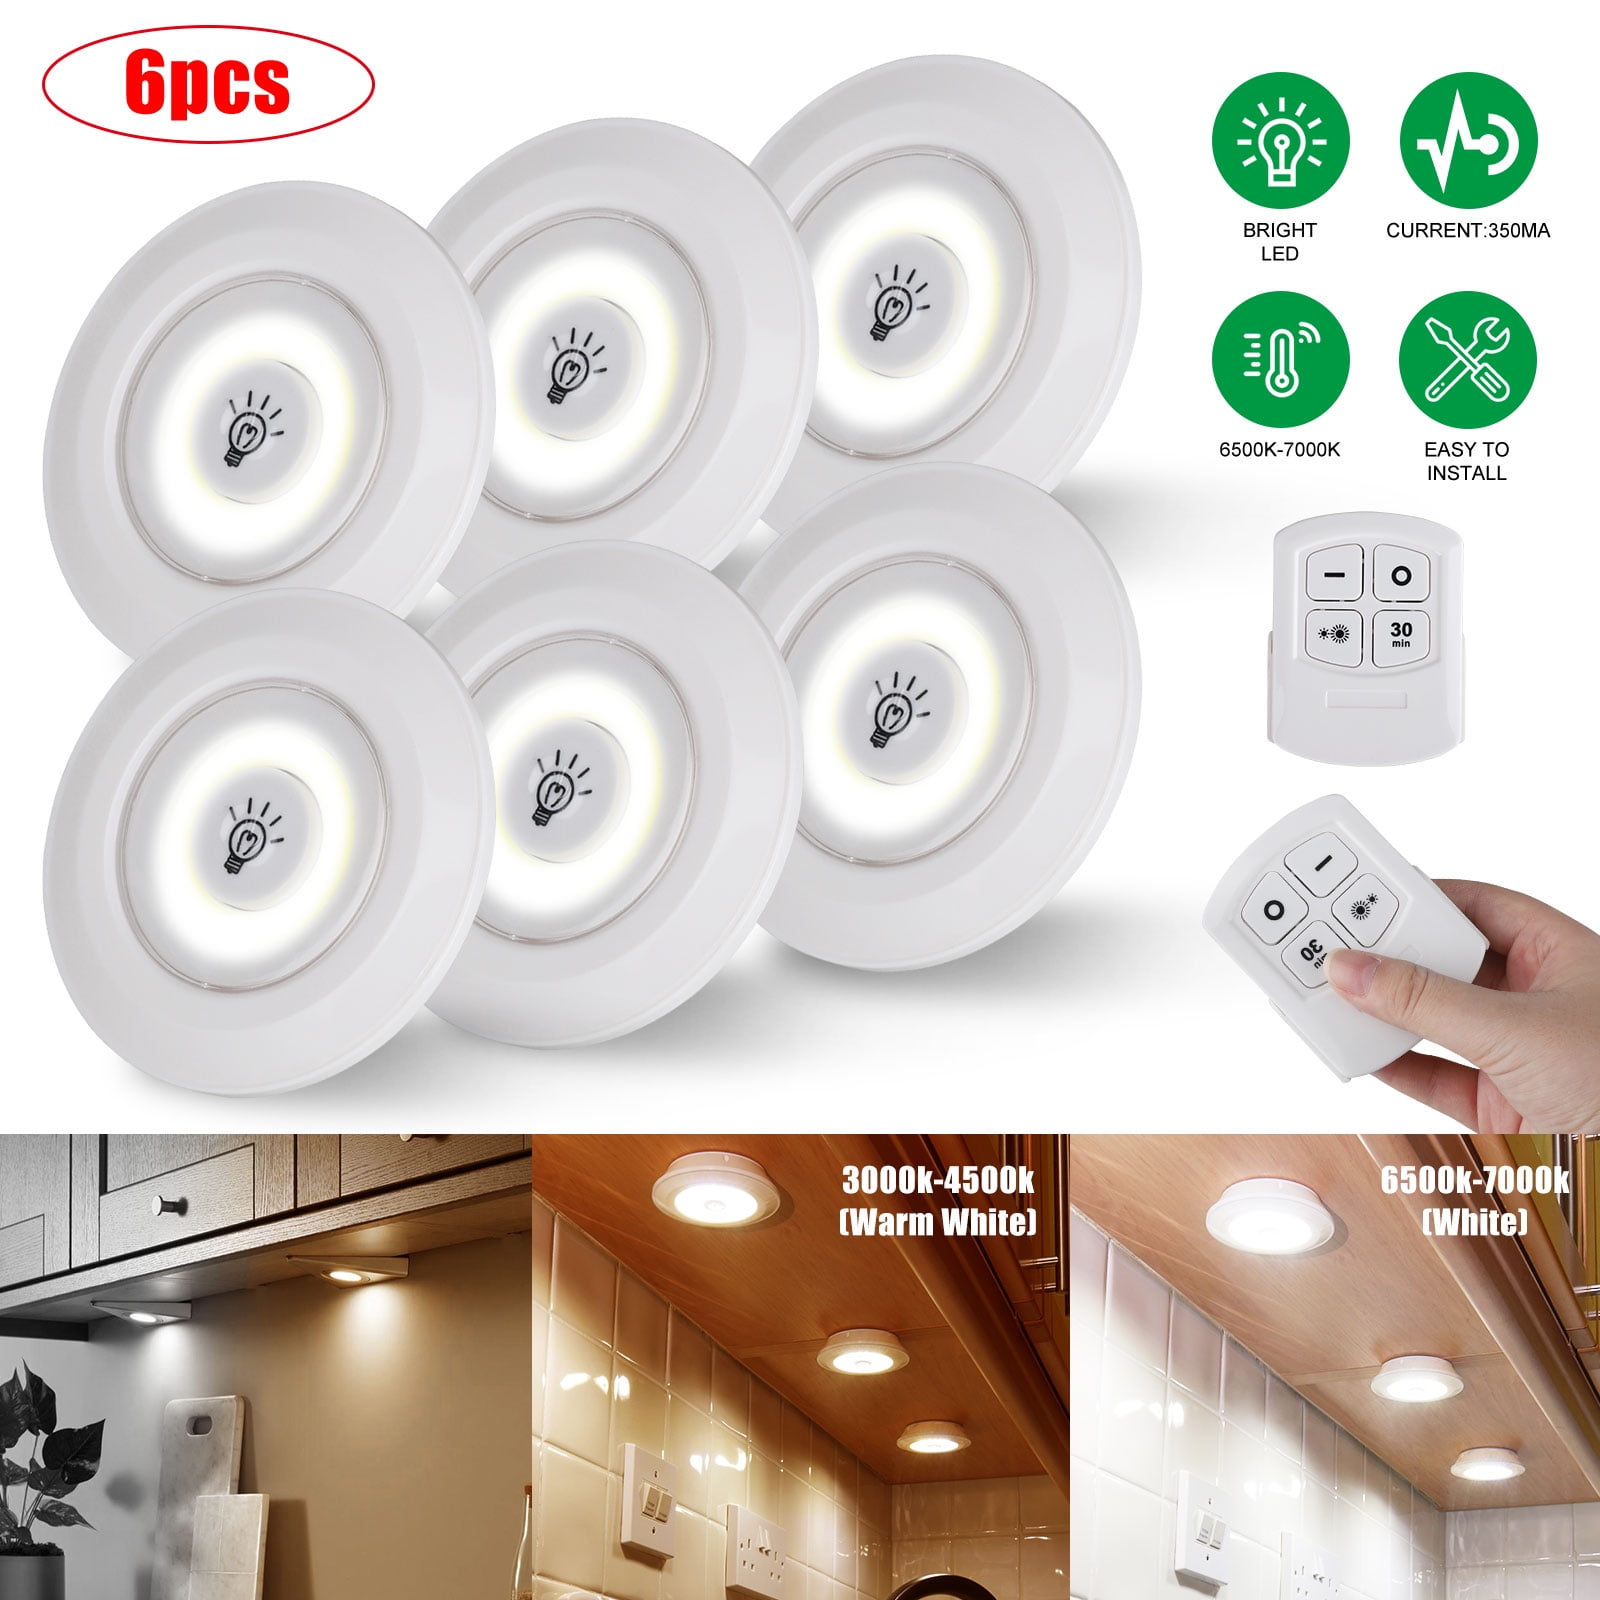 Bright Basics Wireless Light Wall Mount Lamb with Remote Control Closet Cabinet 